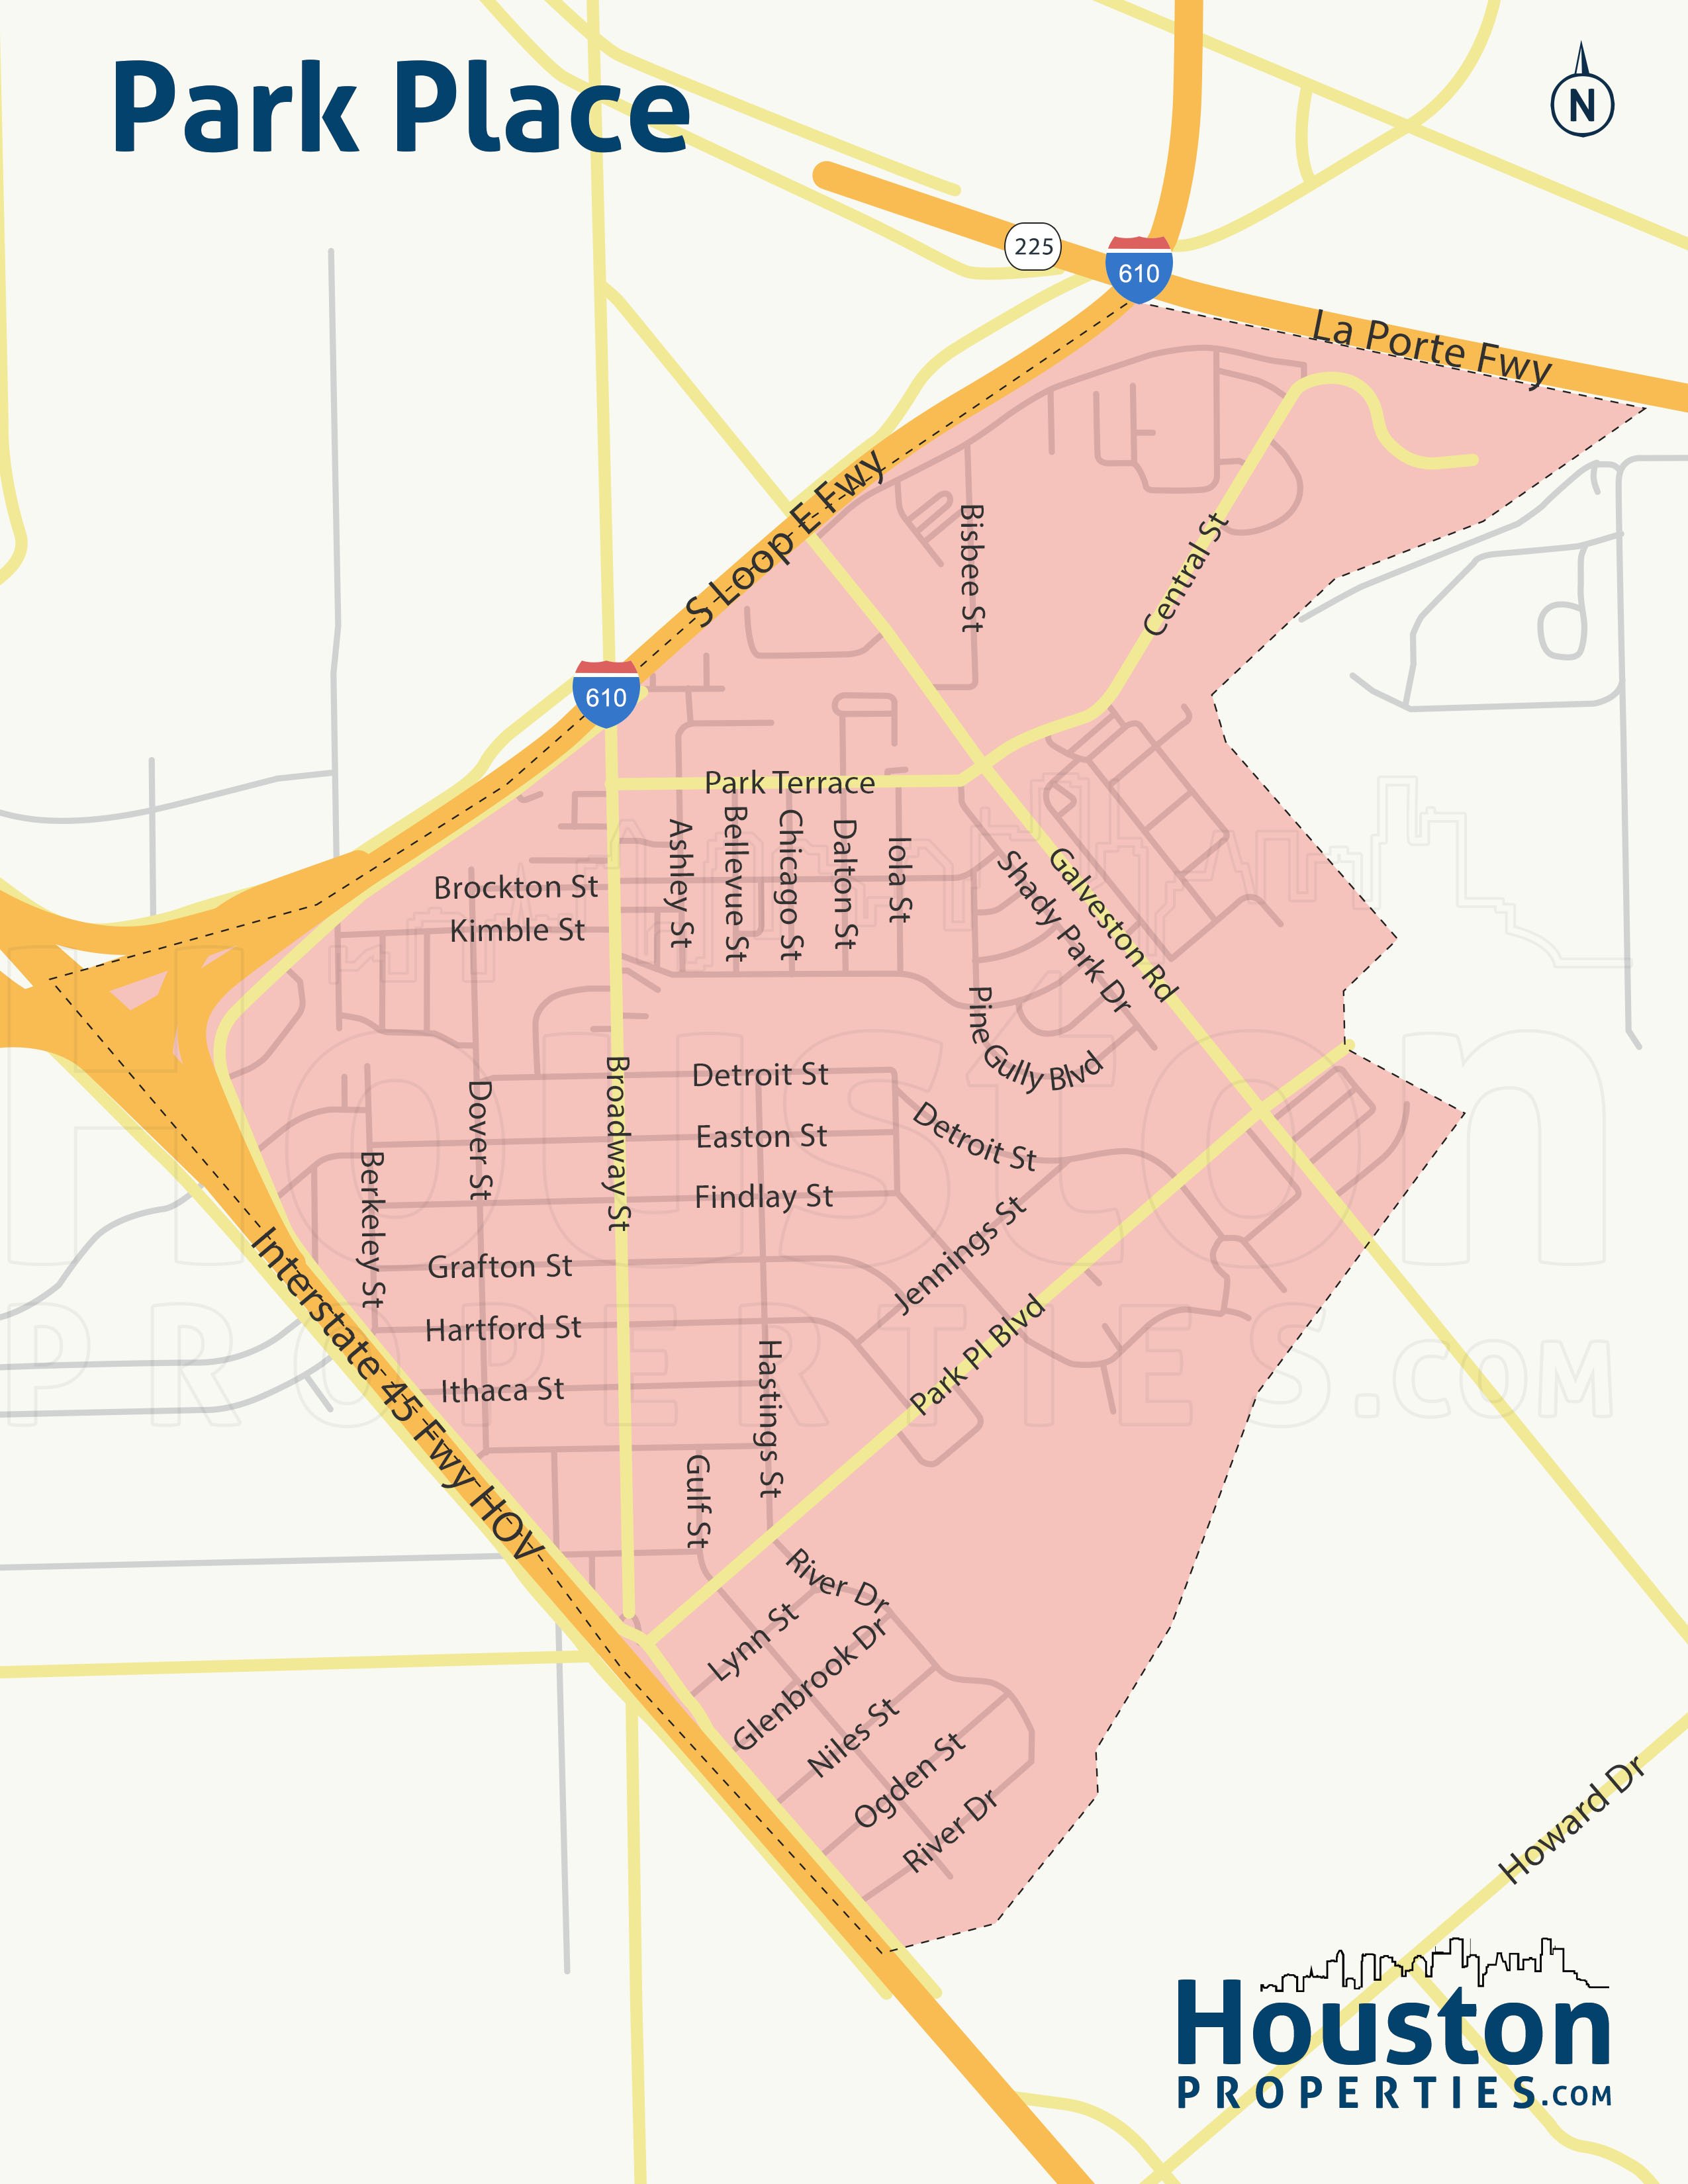 Park Place neighborhood map